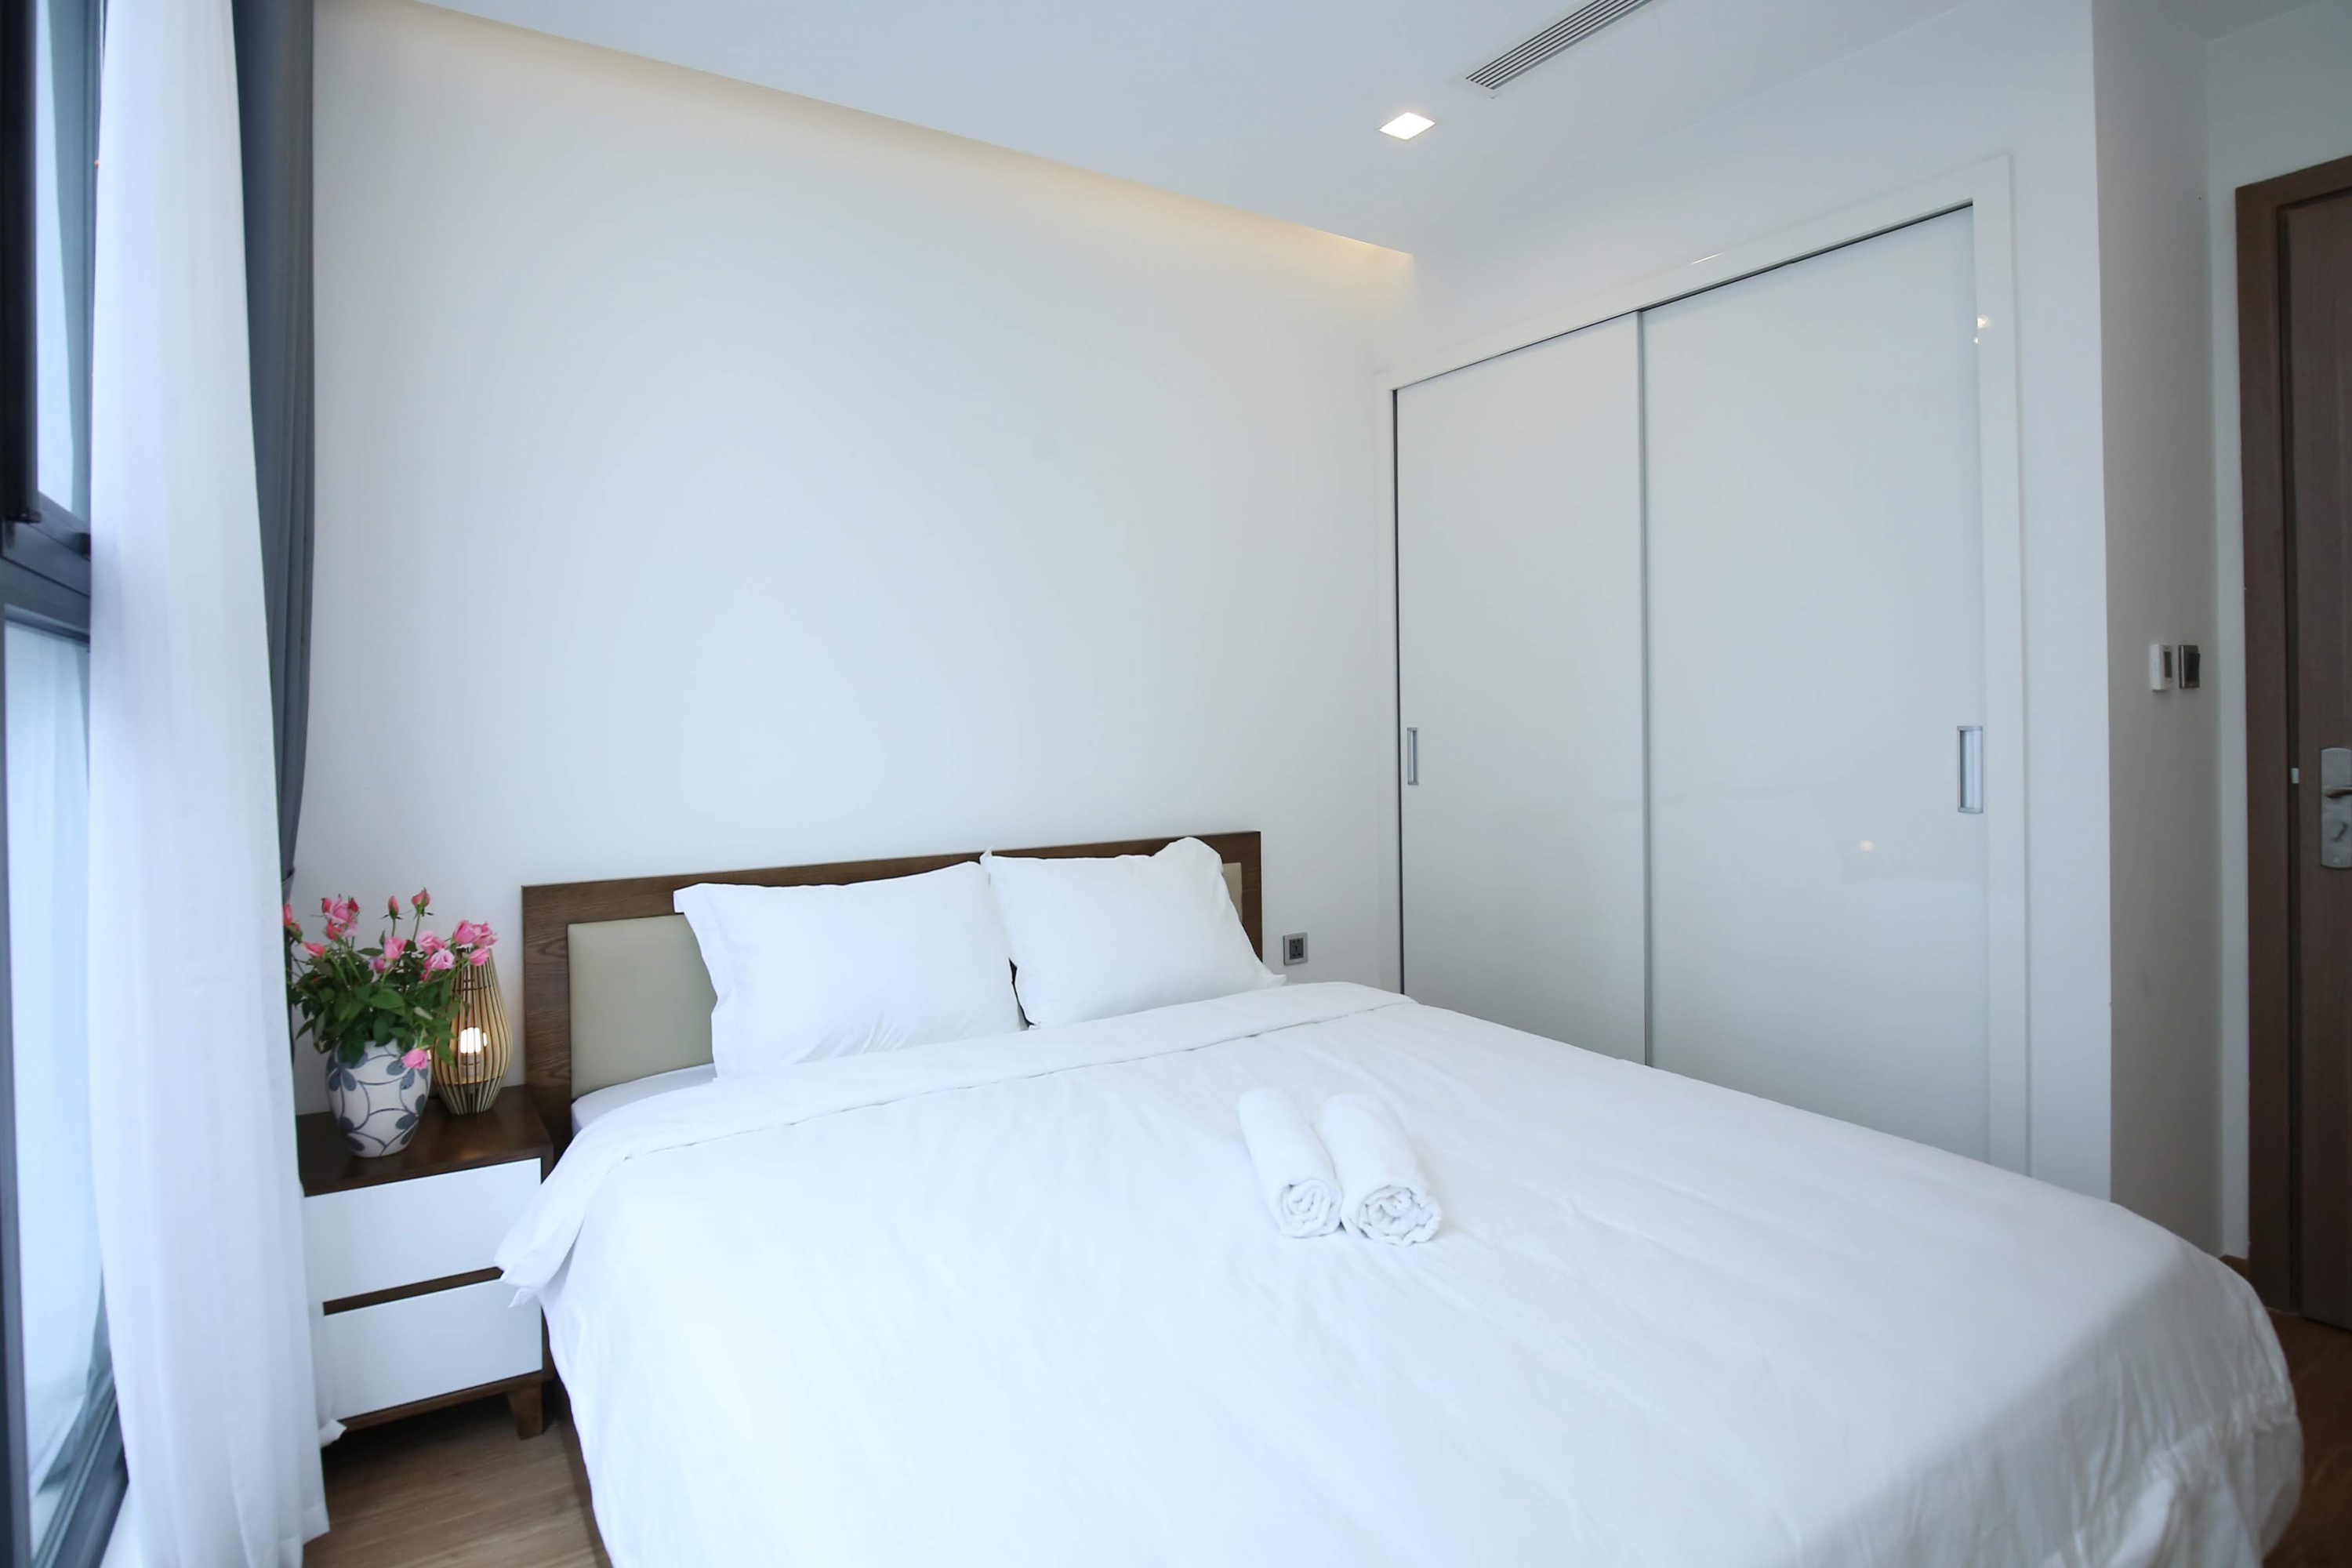 *3BR + 1* Apartment for Rent in Vinhomes Metropolis, 29 Lieu Giai Str, Ba Dinh Dist, Hanoi.